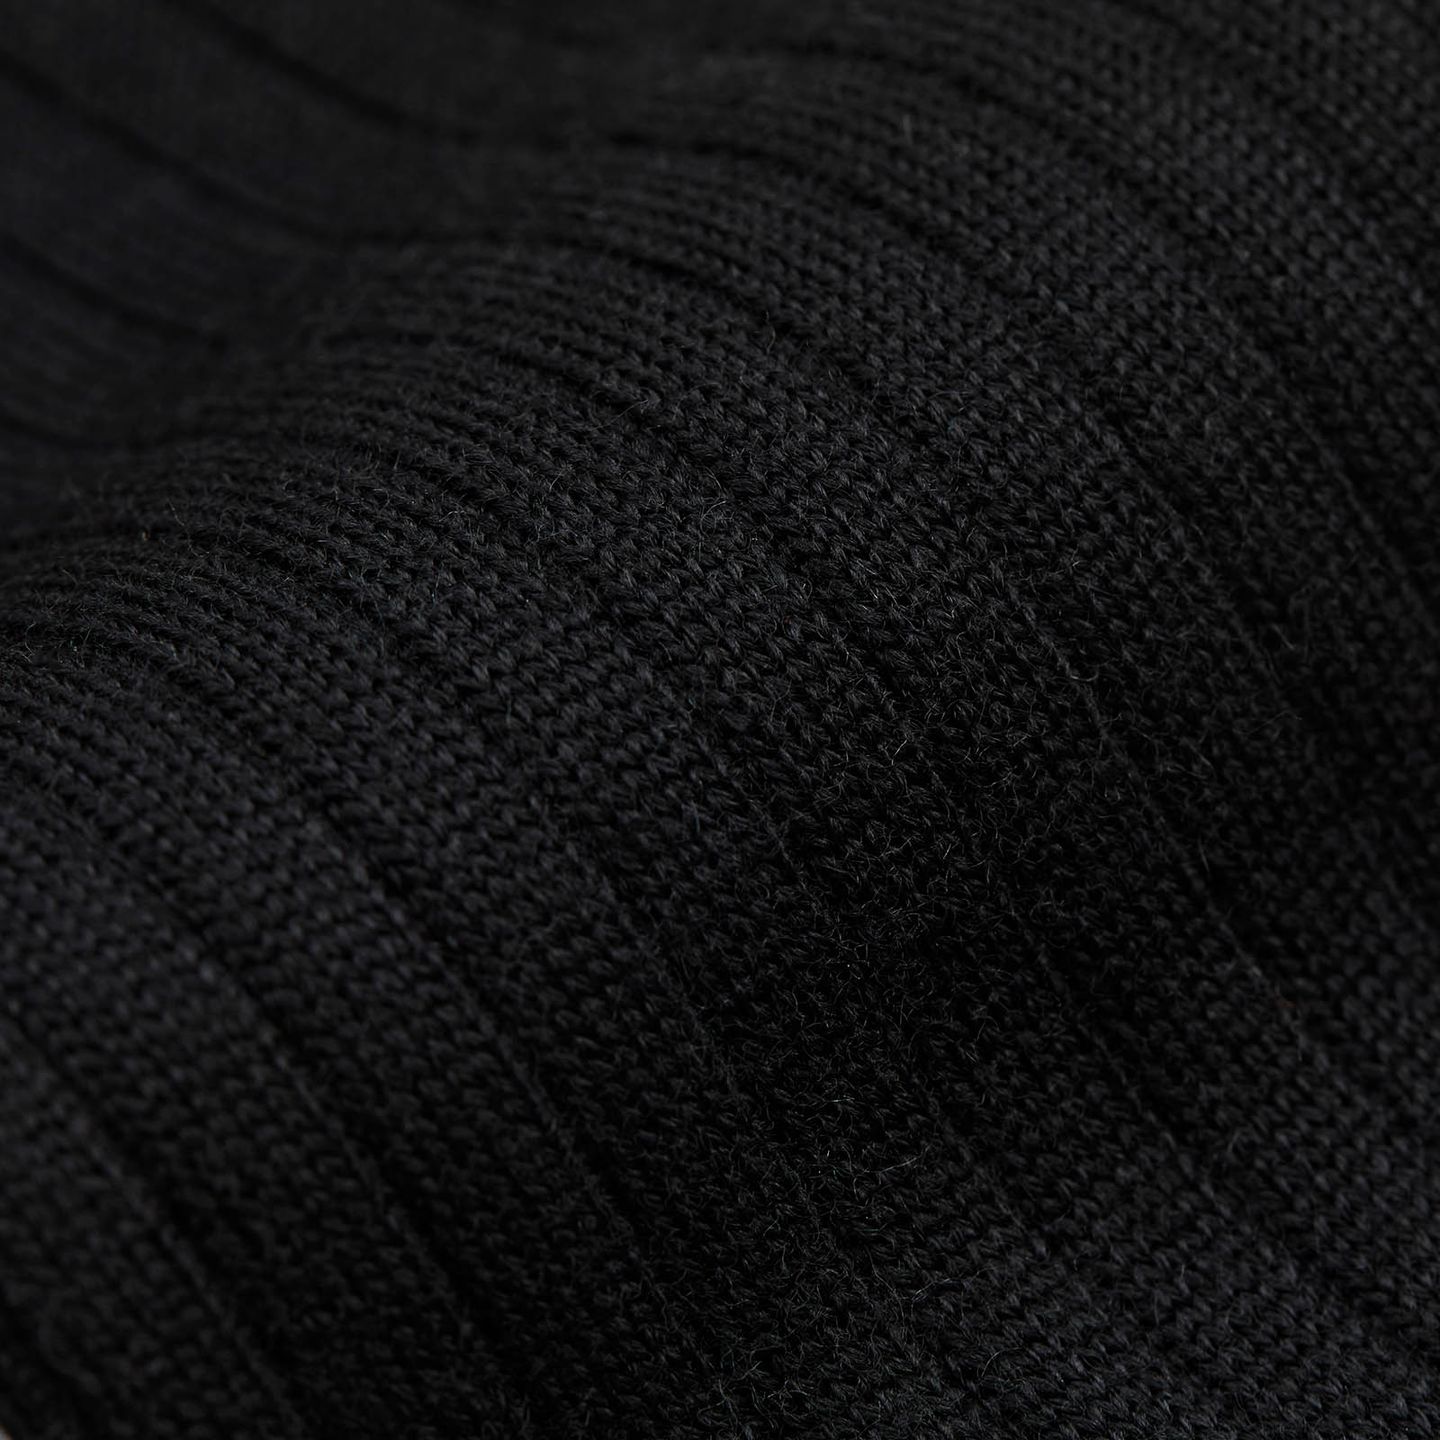 Close up of black merino wool socks